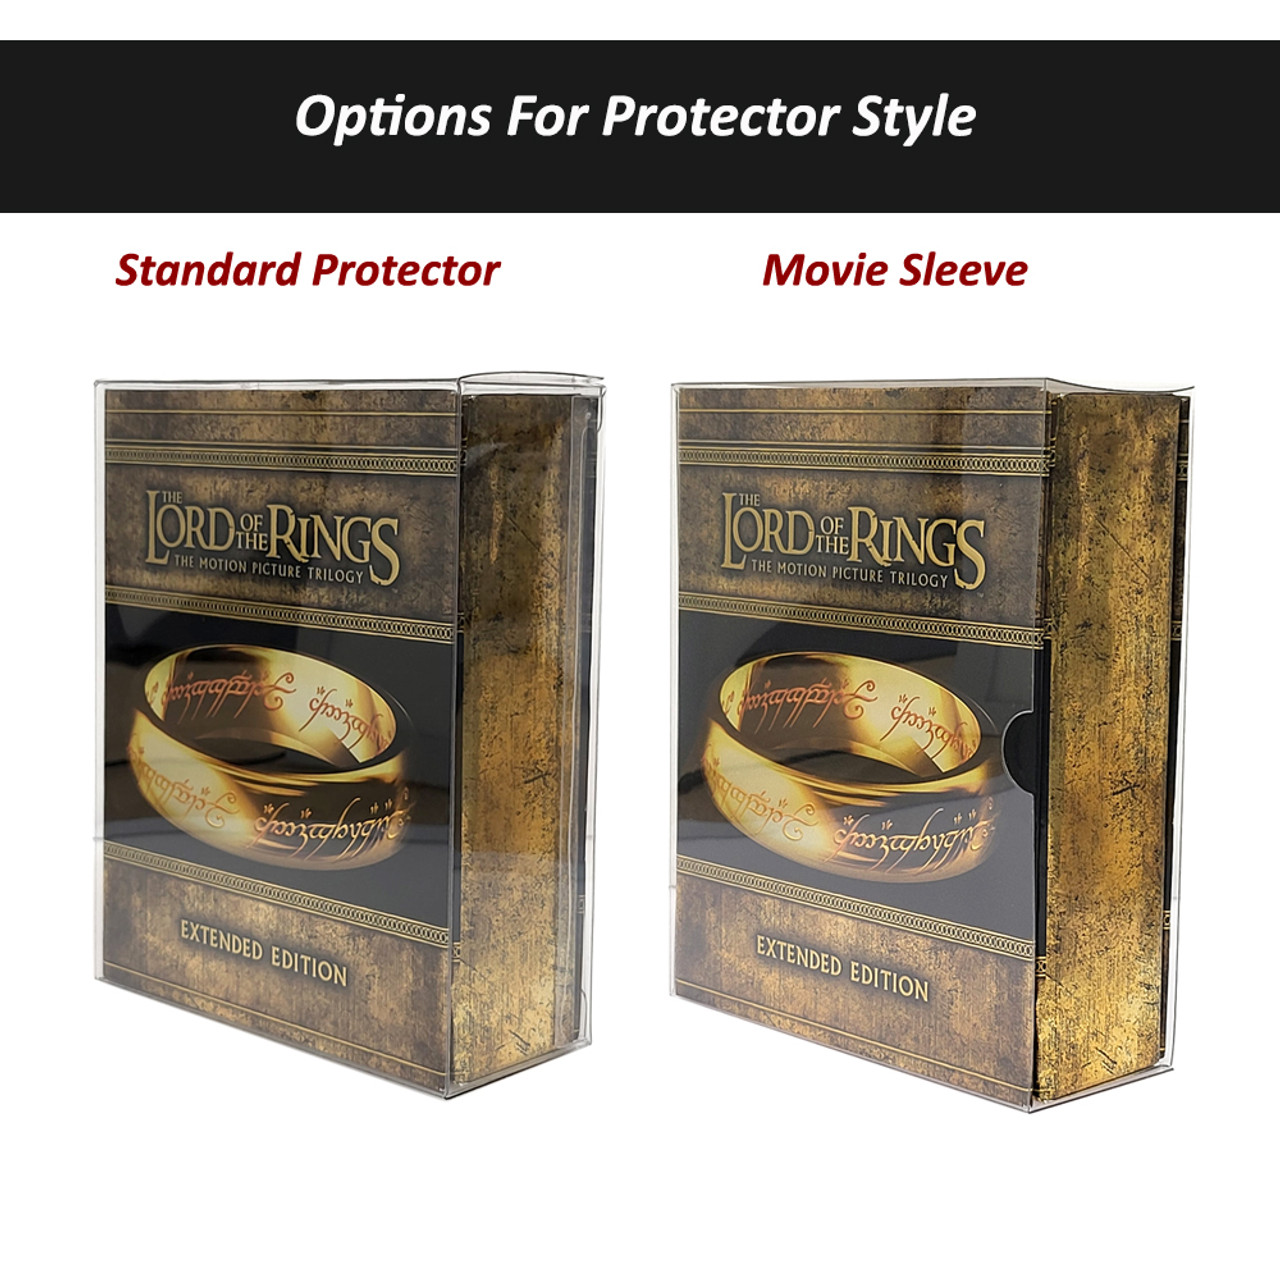 Protector For Columbia Classics 4k Box Set